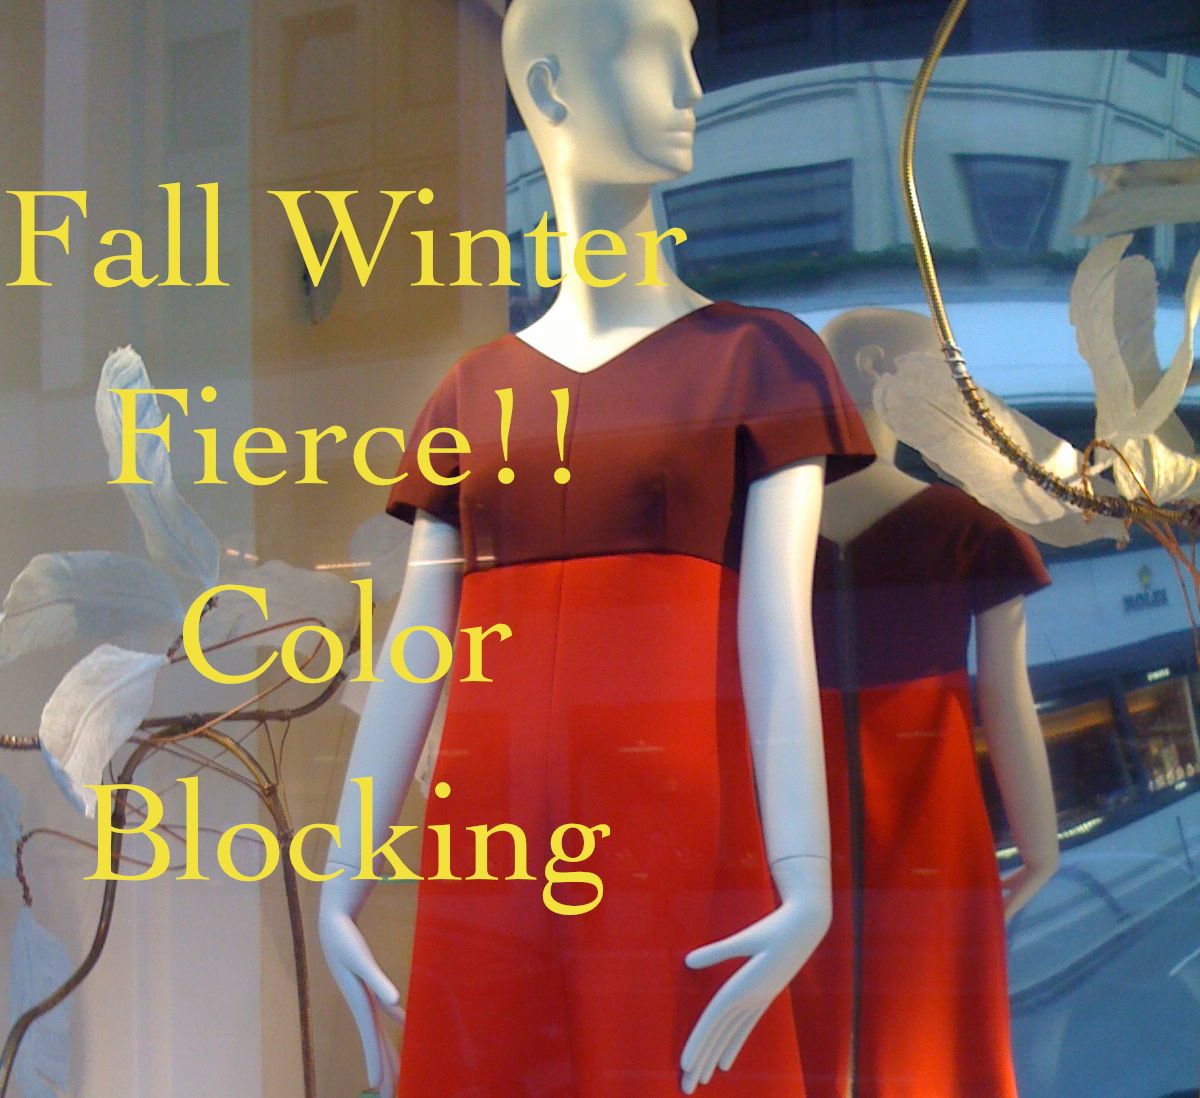 <!--:en-->Totally Fierce!!!!! Color Blocking for Fall Winter!!!<!--:-->